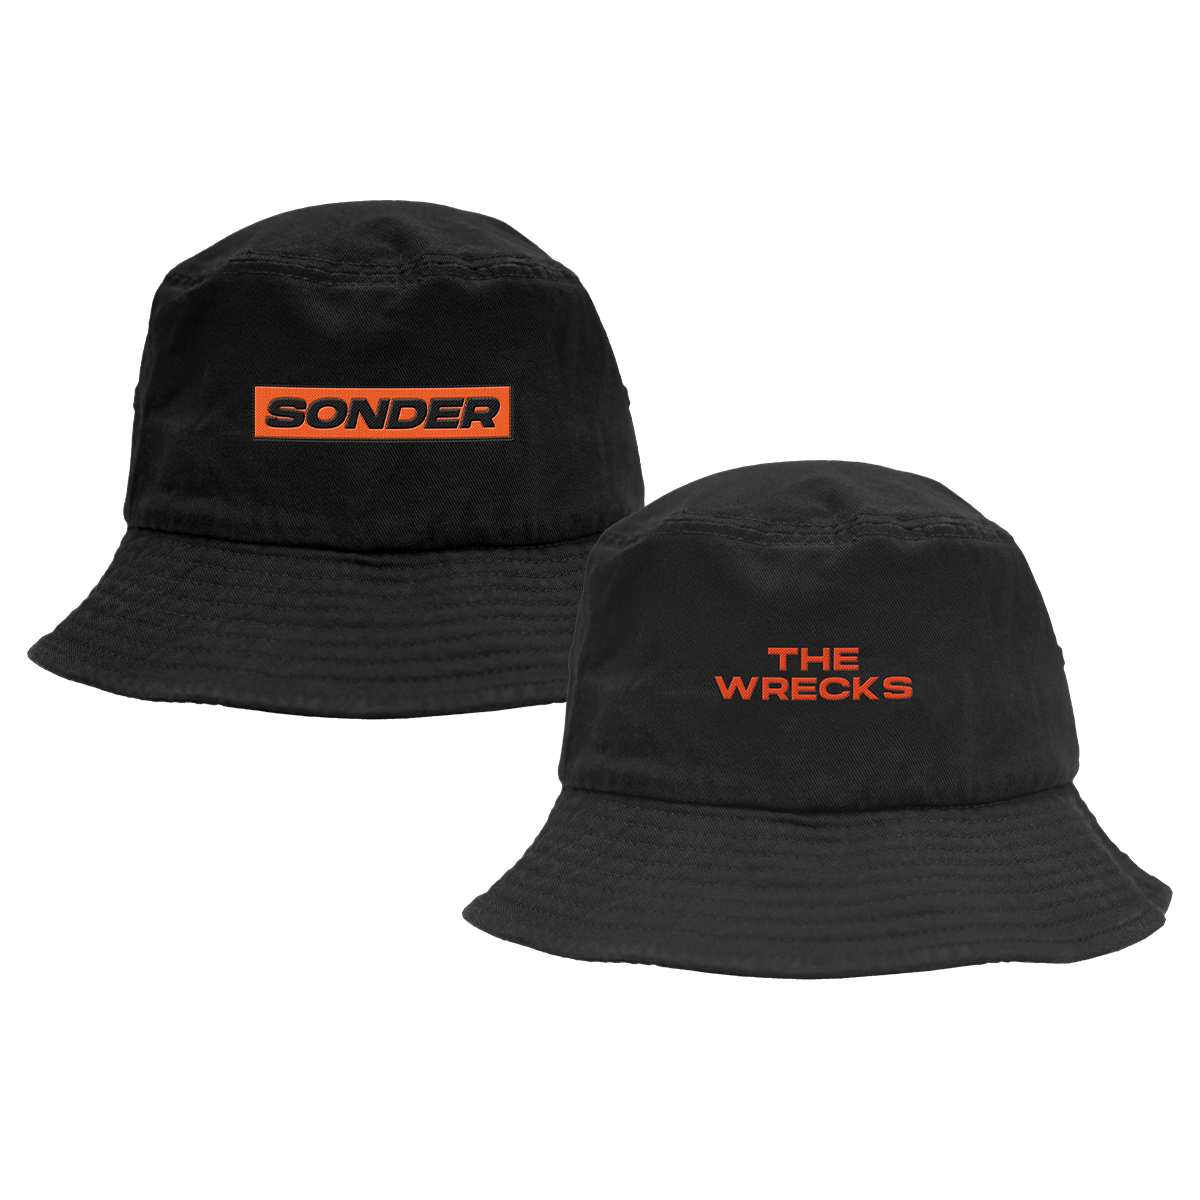 The Wrecks Sonder Bucket Hat - Black front and back